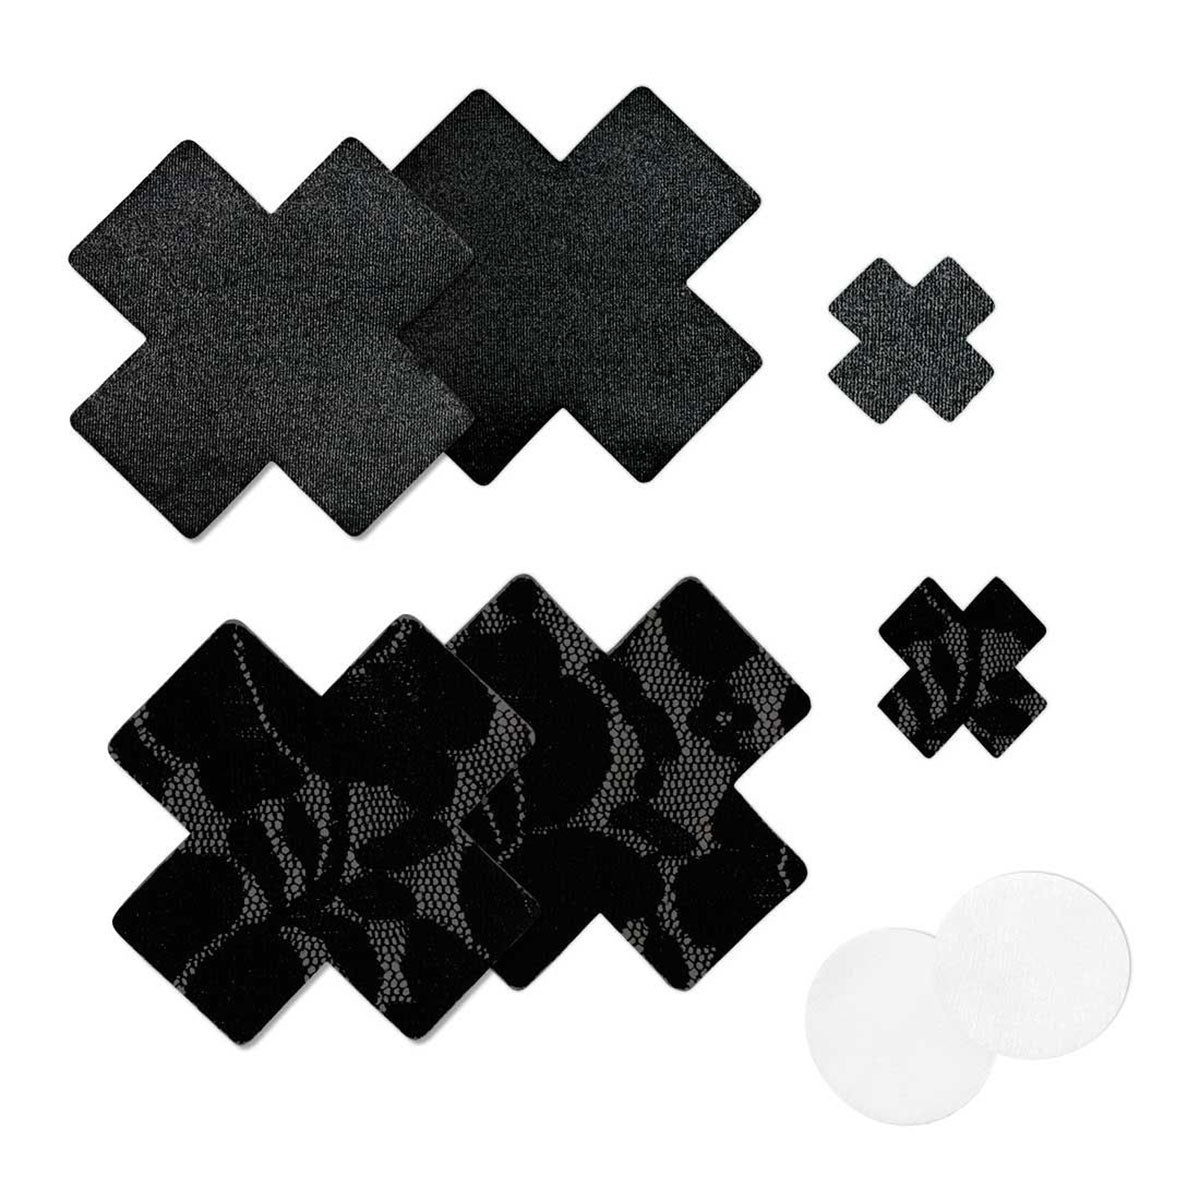 Nippies Basics - Black Crosses - Size B